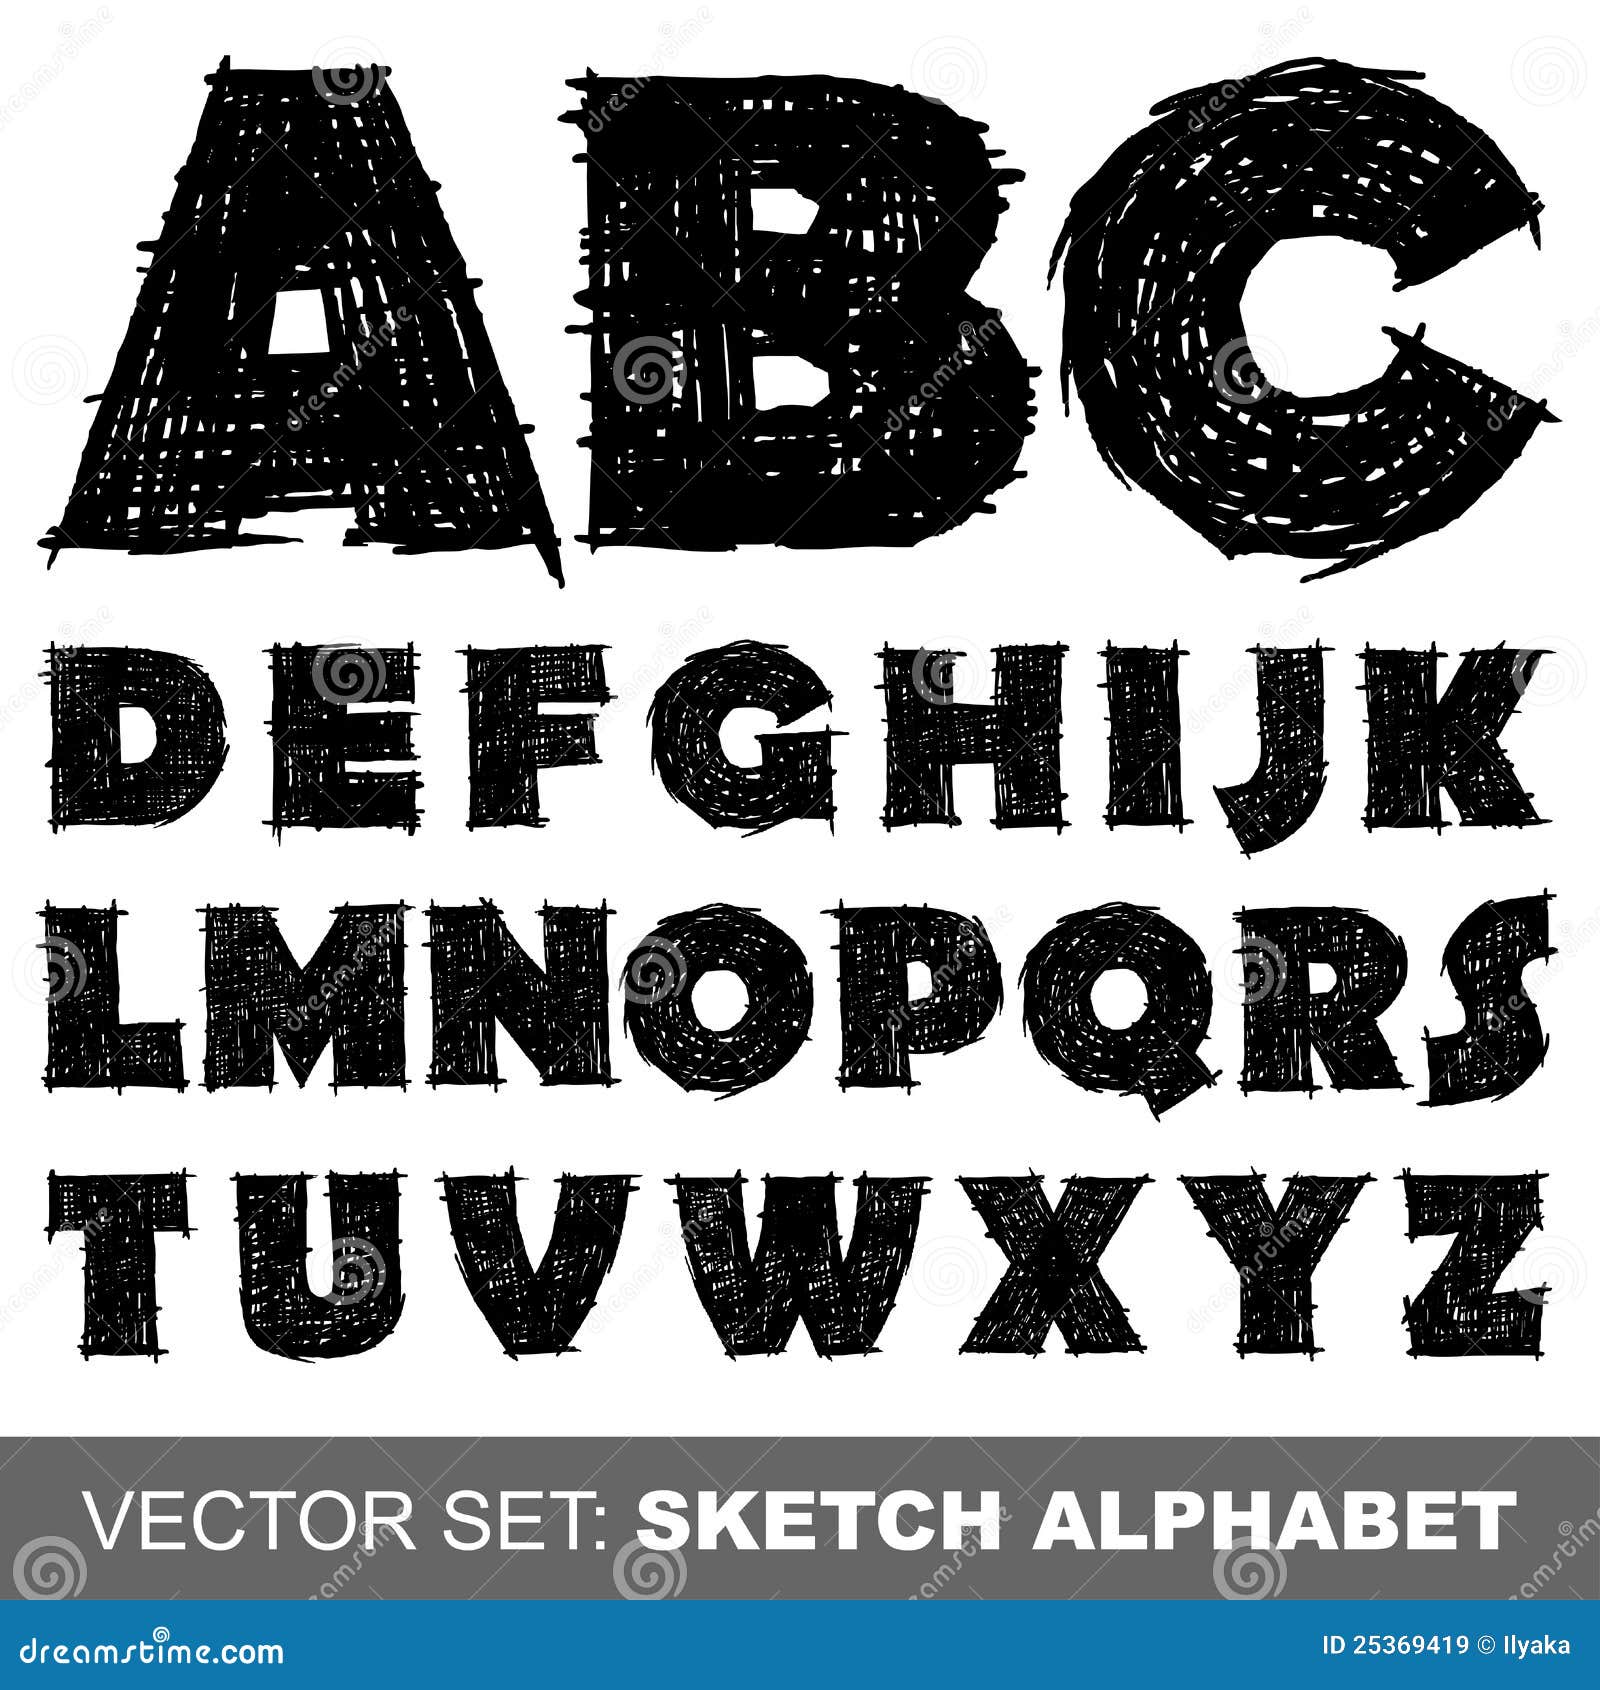 Vector Sketch Alphabet stock vector. Illustration of extra - 25369419